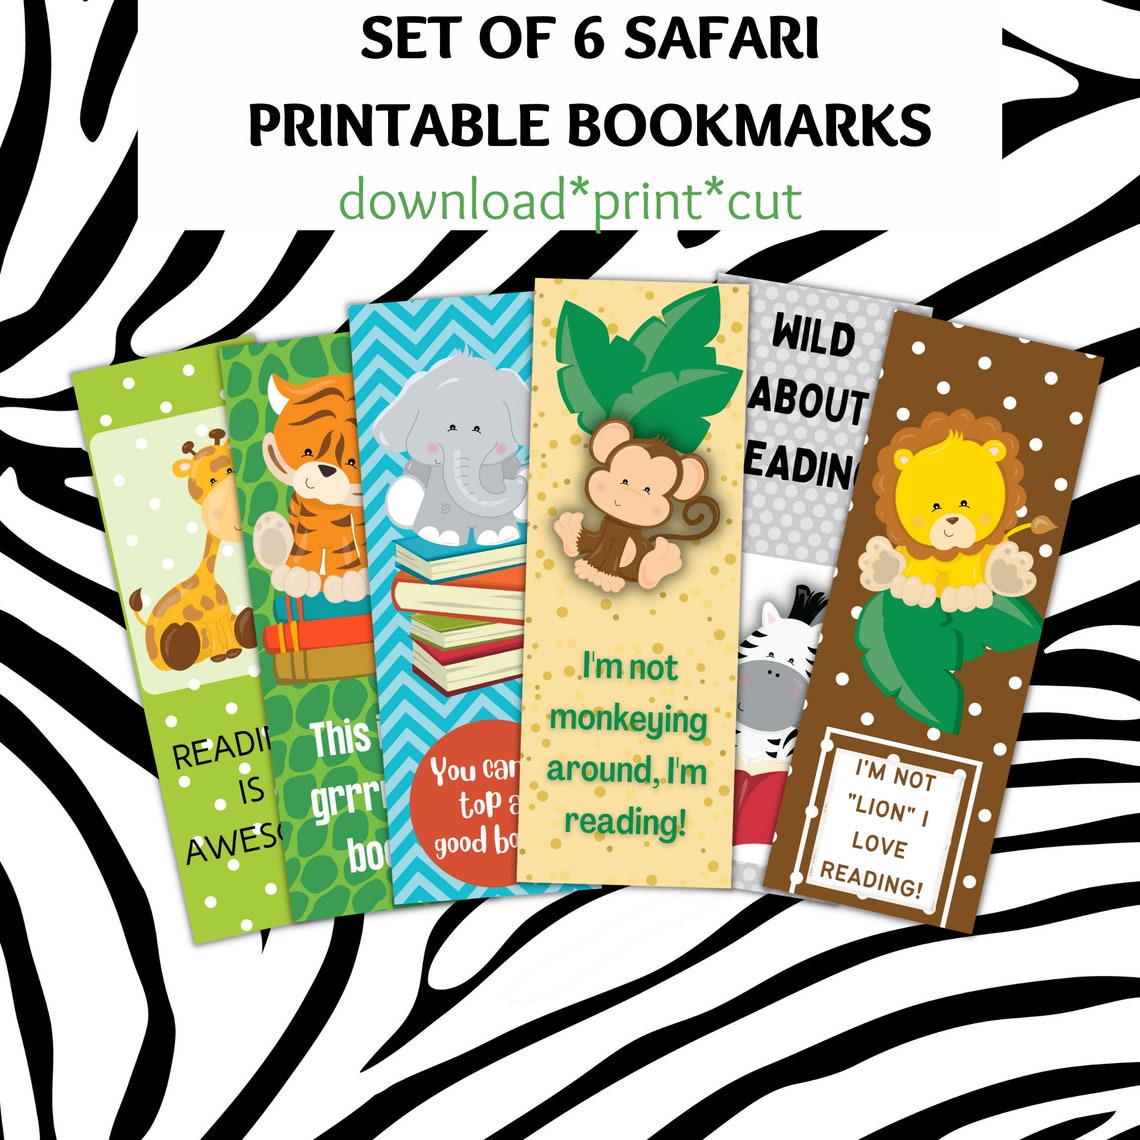 safari organize bookmarks alphabetically